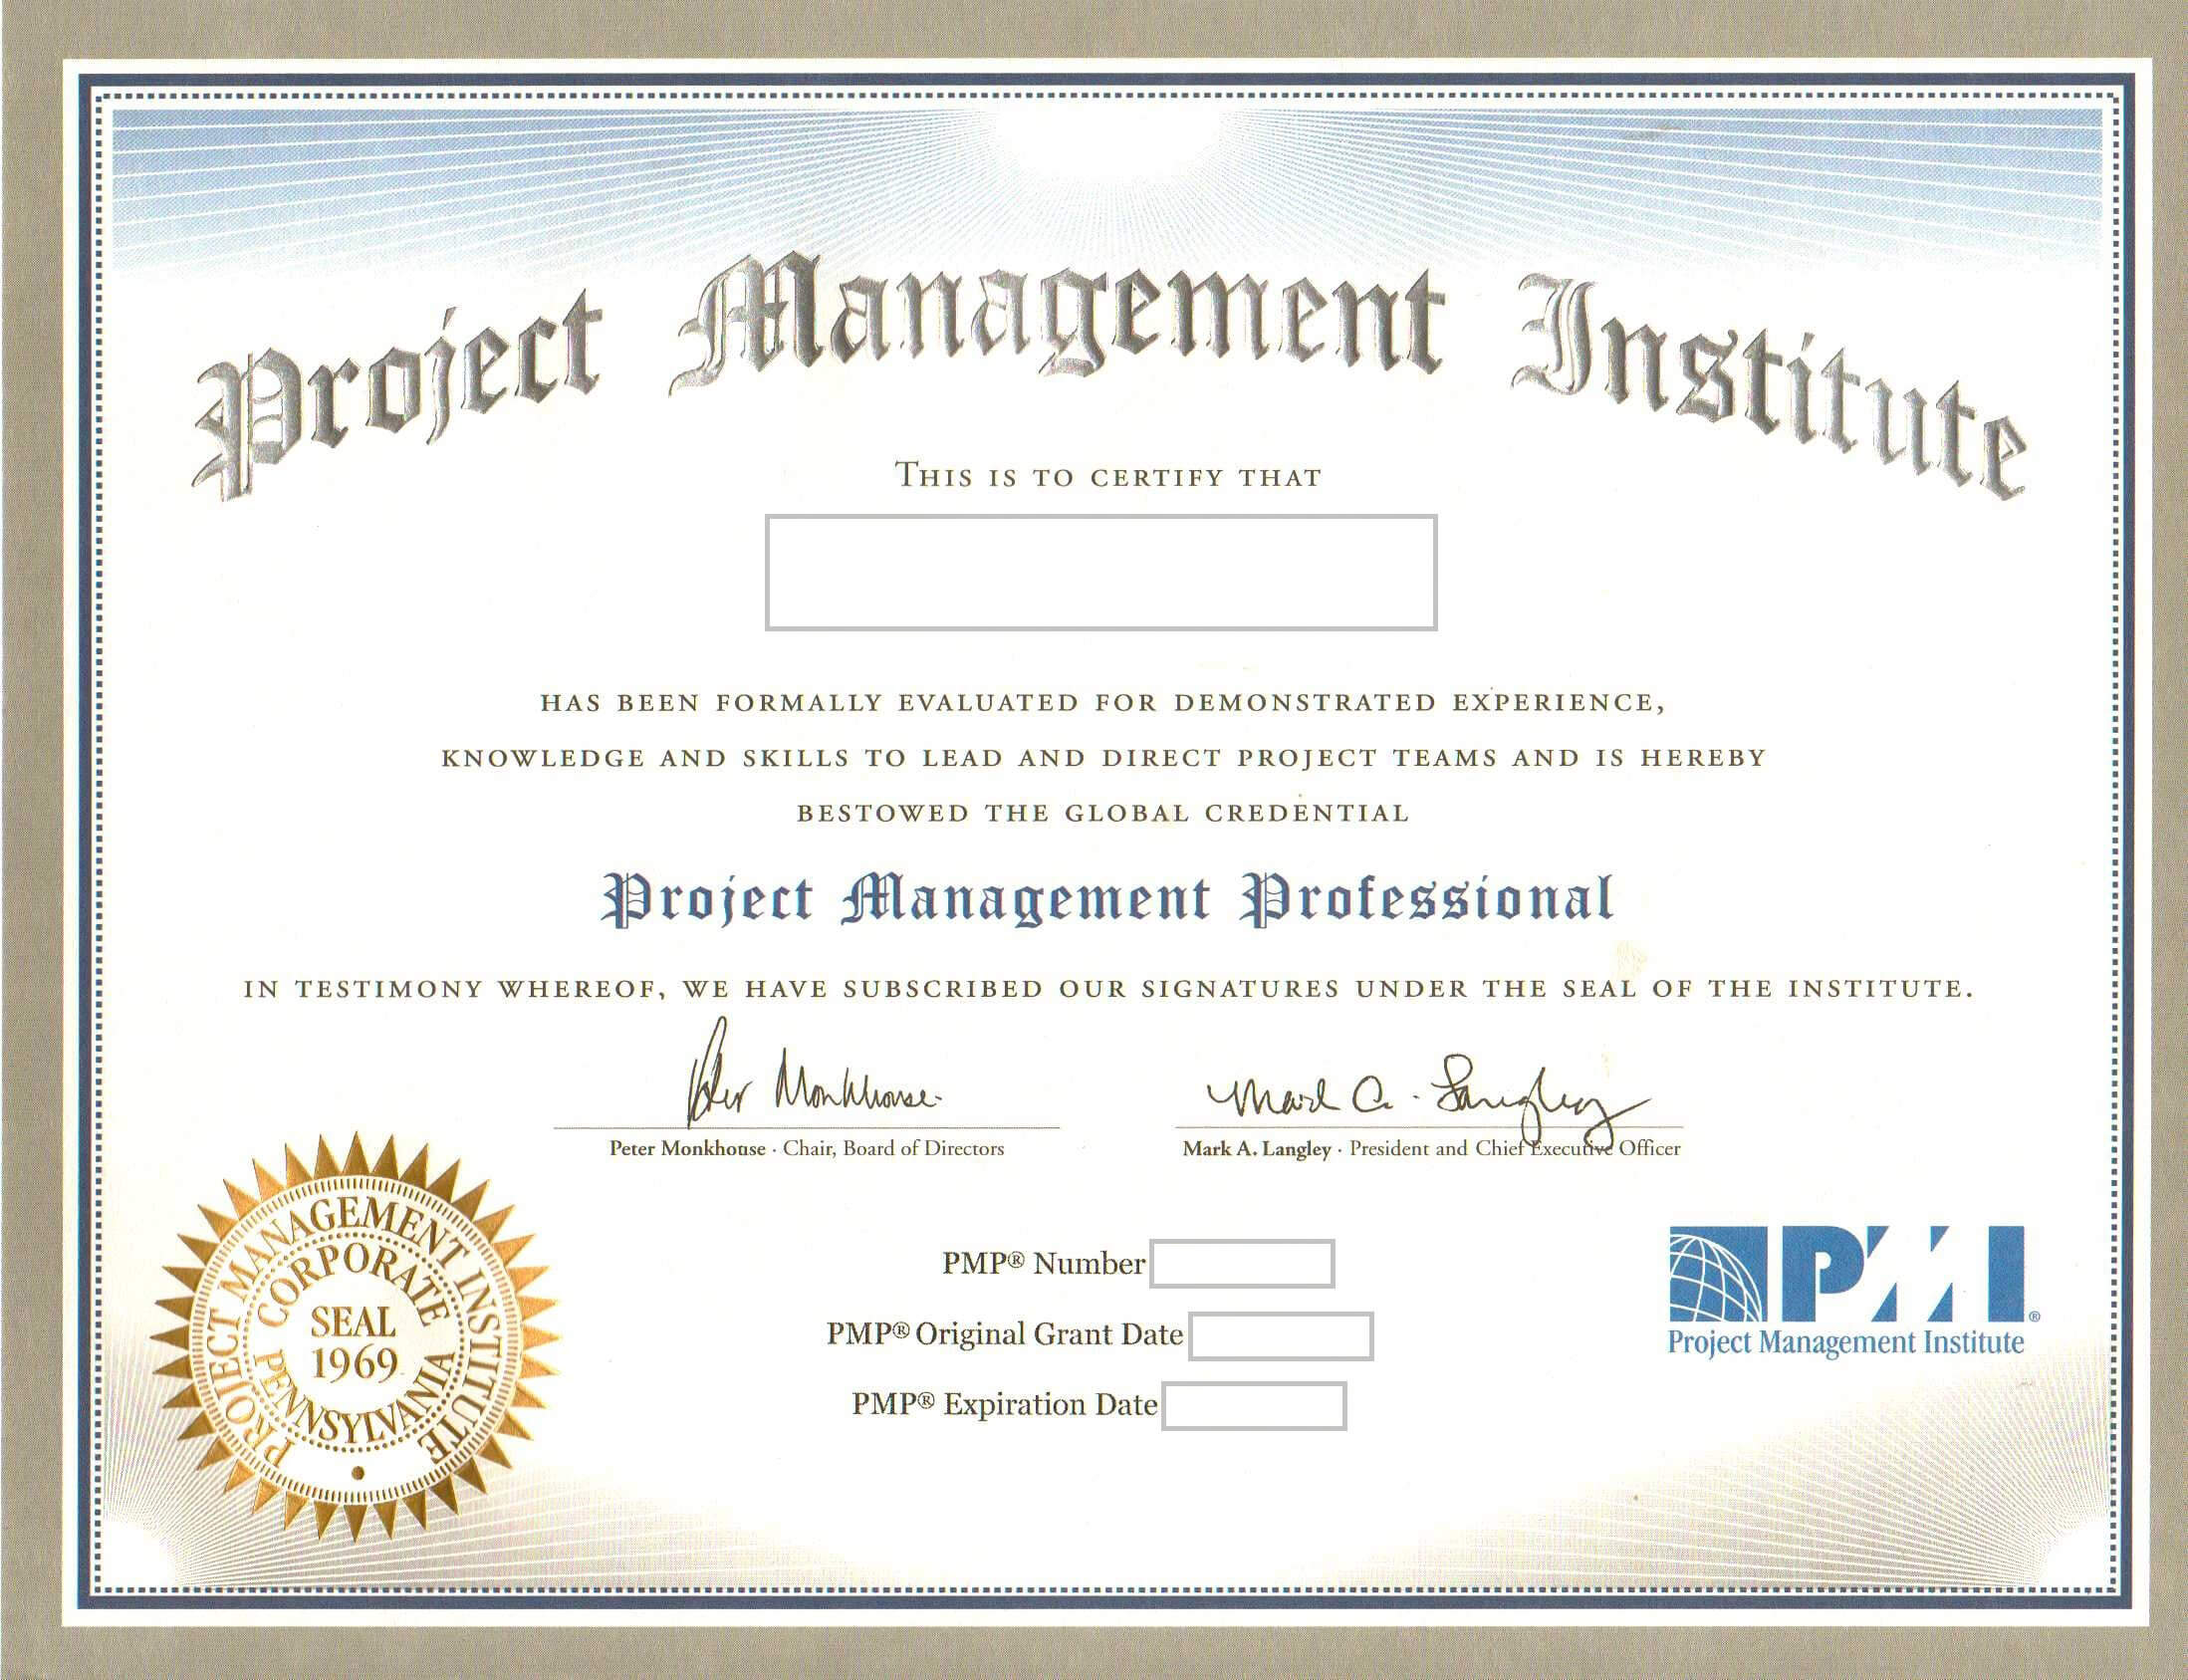 pmp certification exam